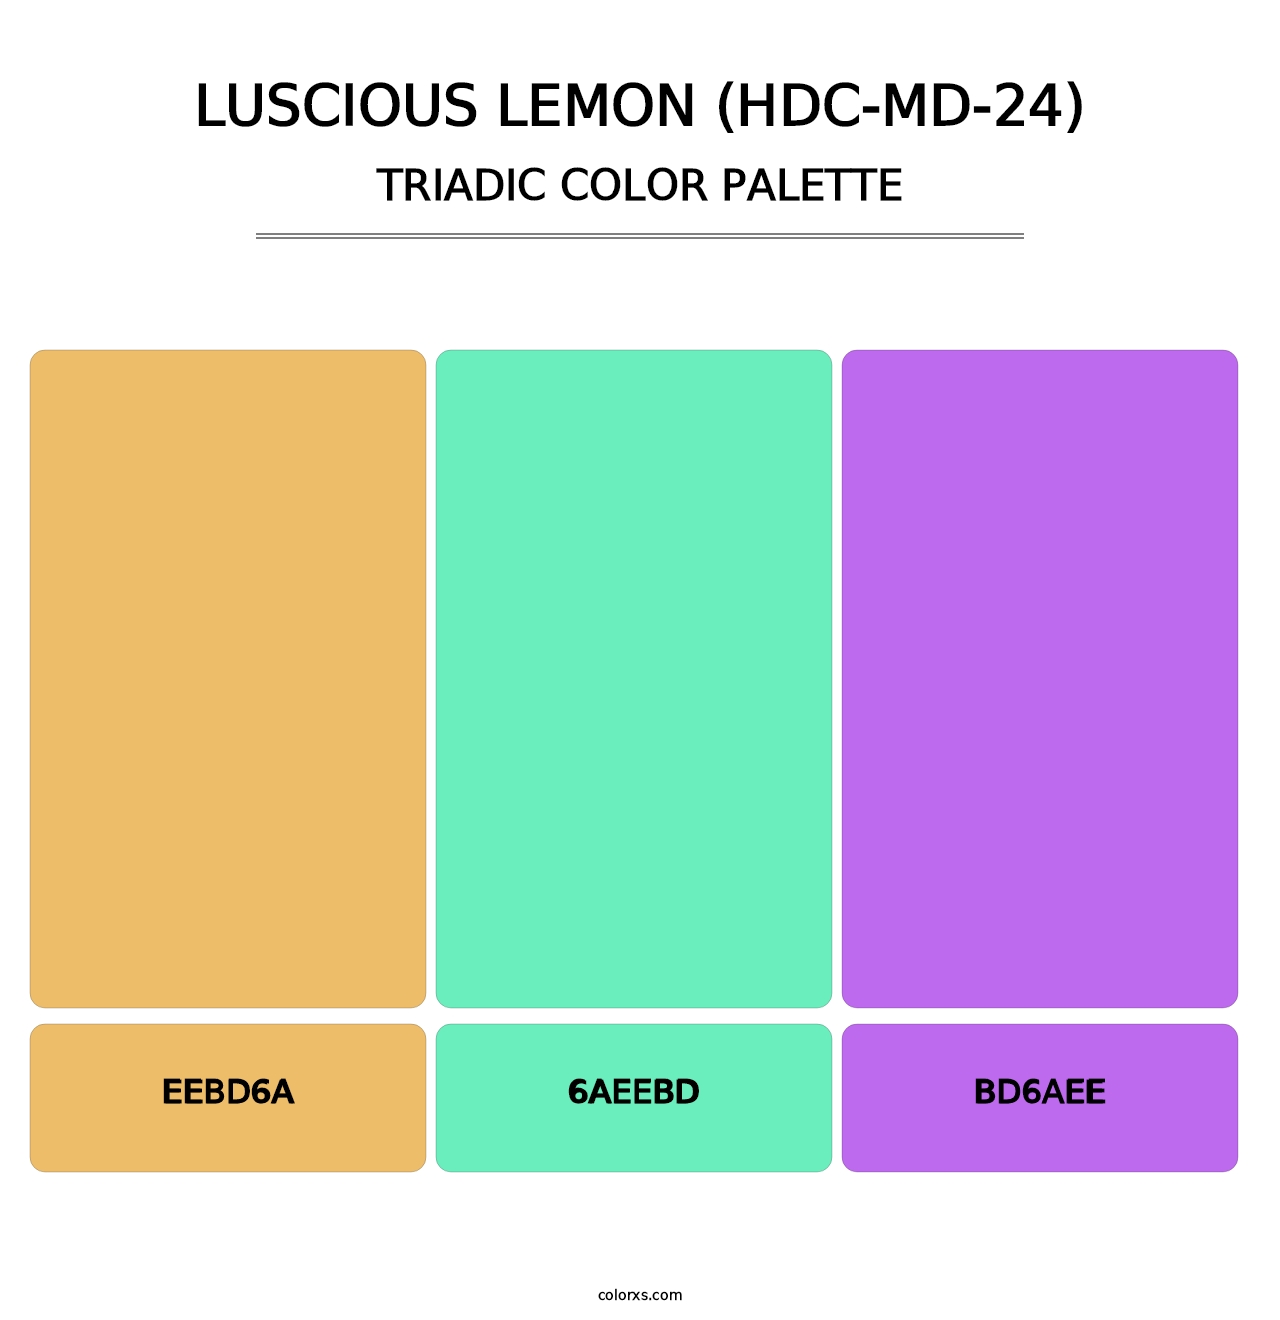 Luscious Lemon (HDC-MD-24) - Triadic Color Palette